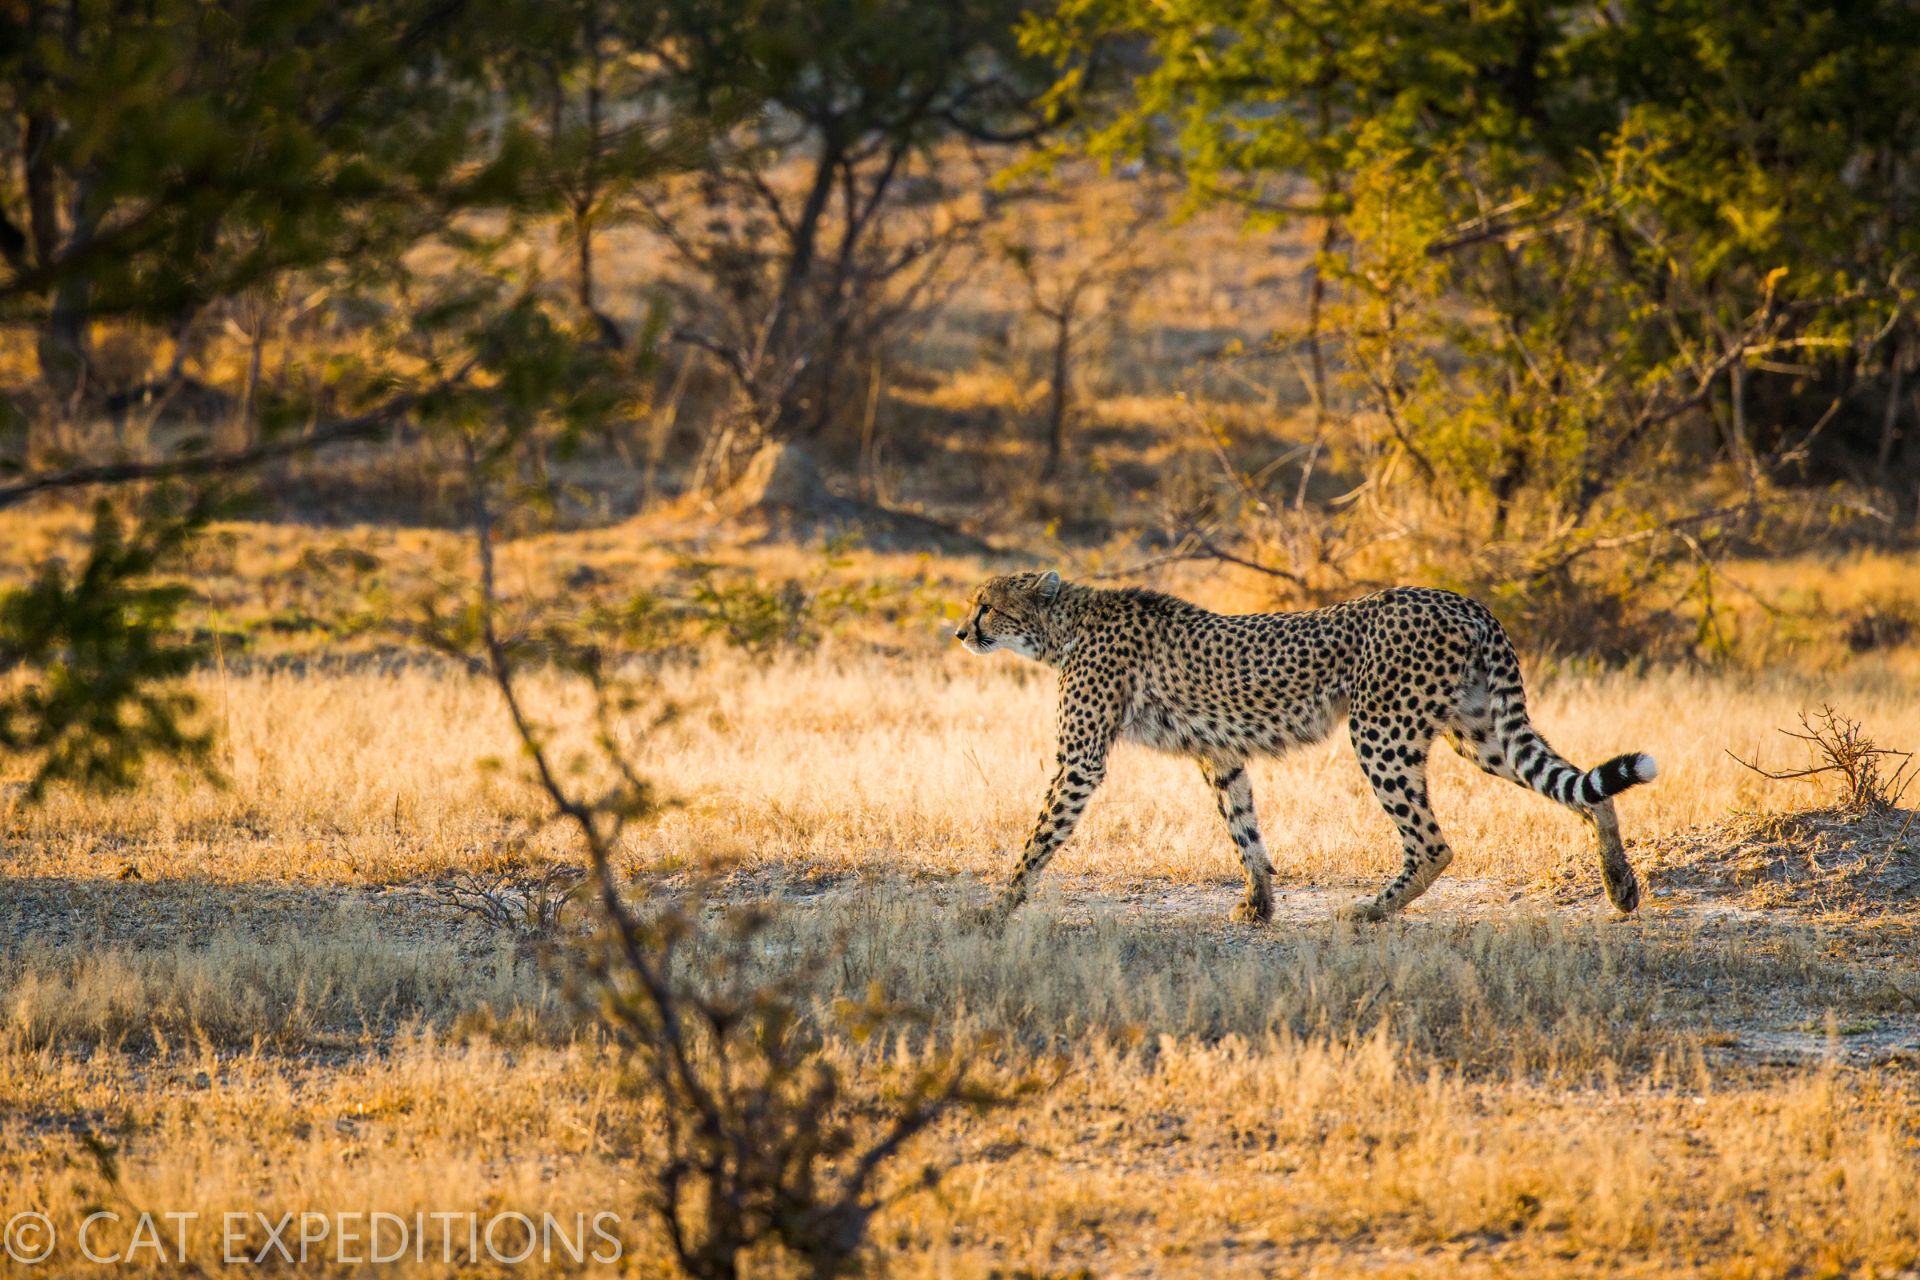 Savanna woodland is great habitat for cheetah